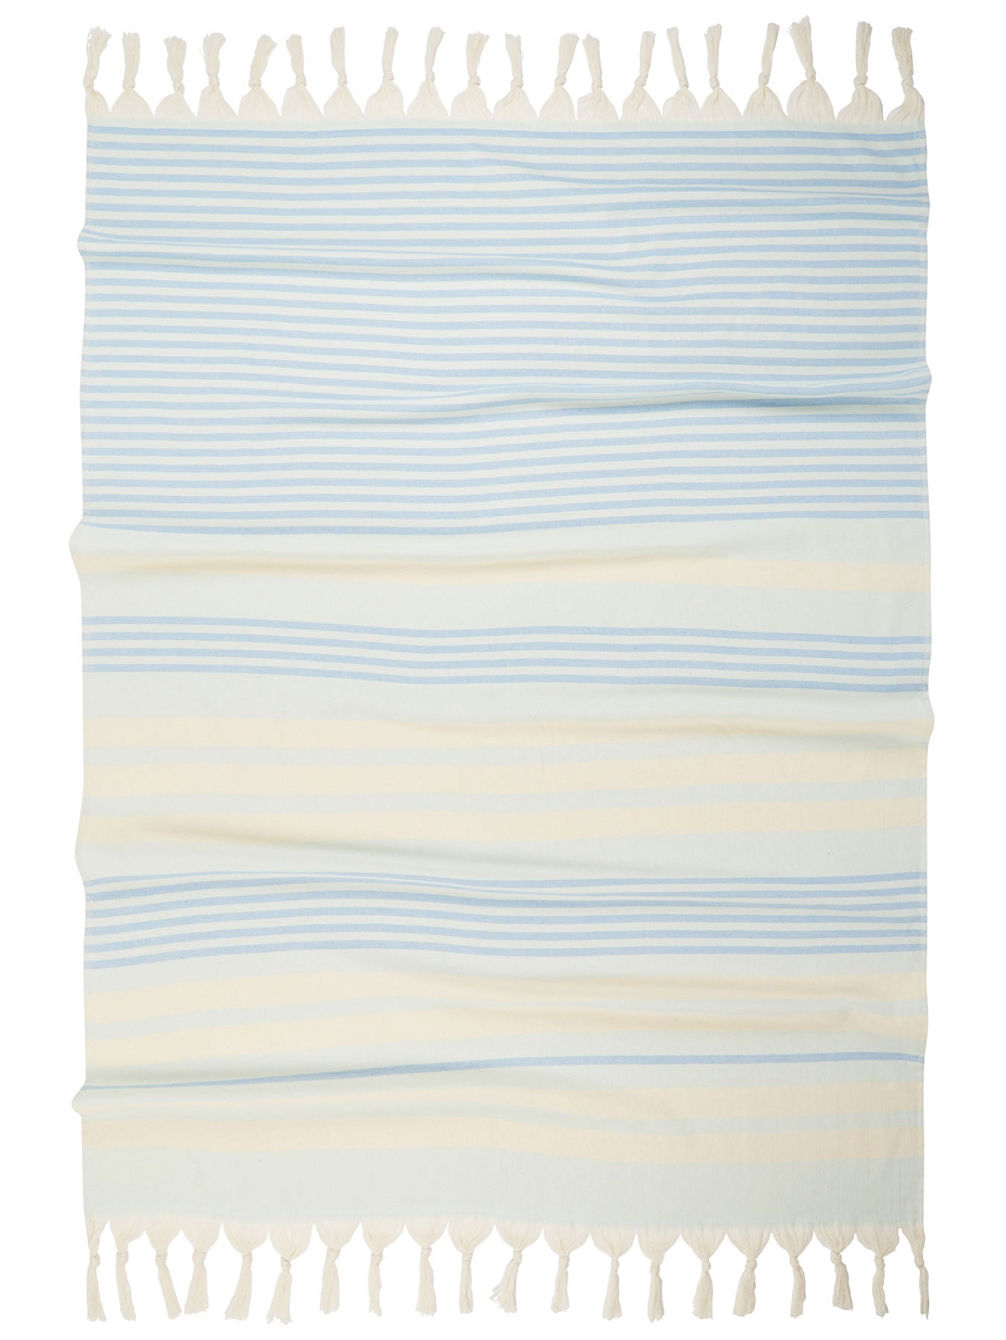 Shell Beach Towel